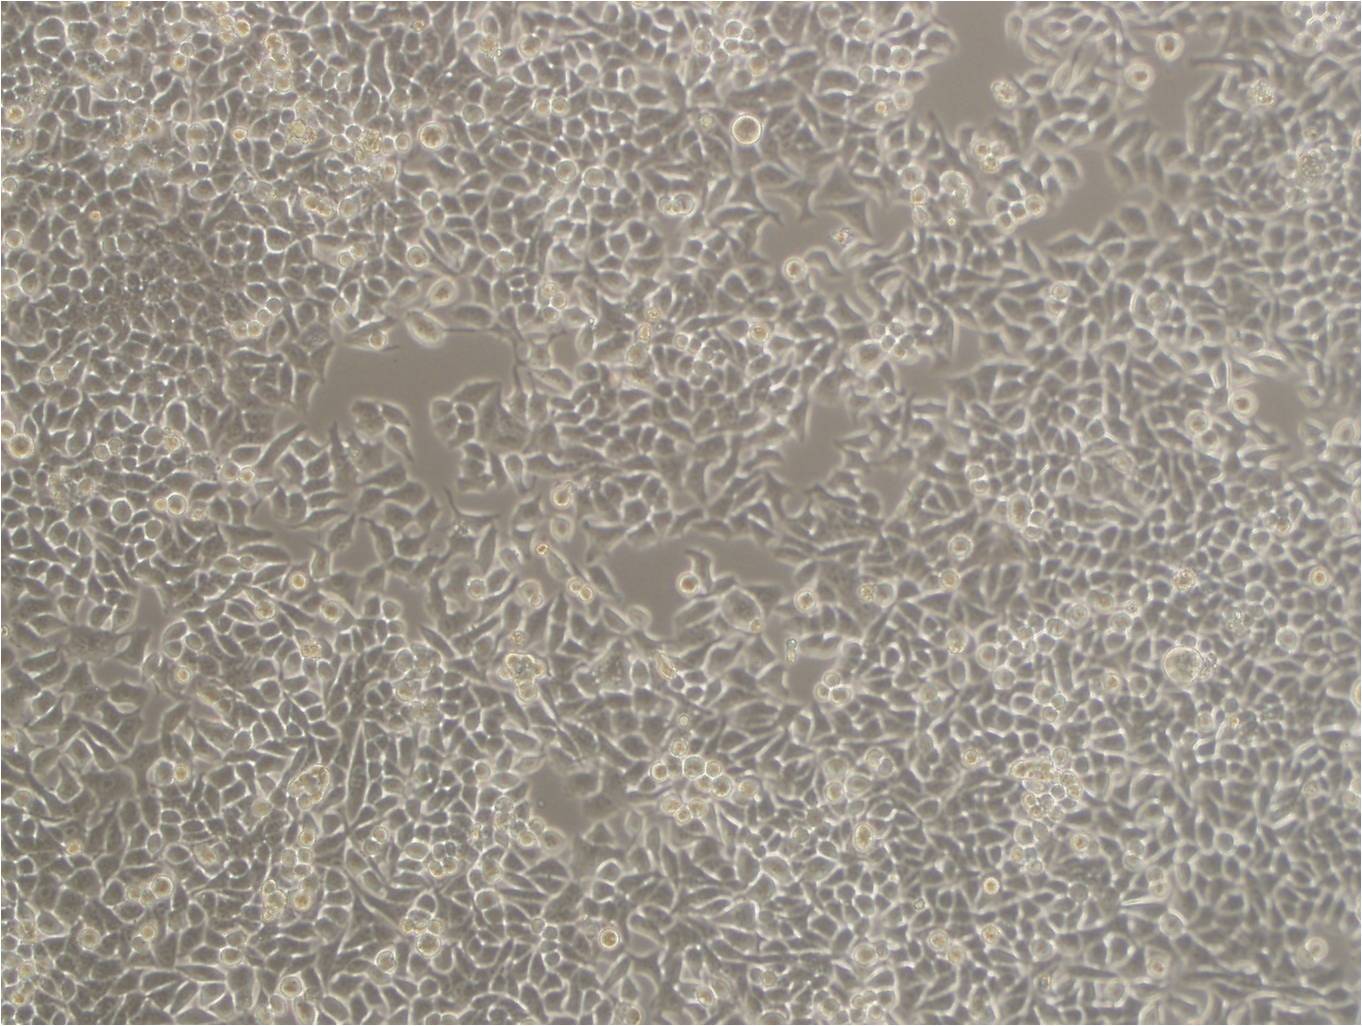 NCI-H446 cell line人小细胞肺癌细胞系